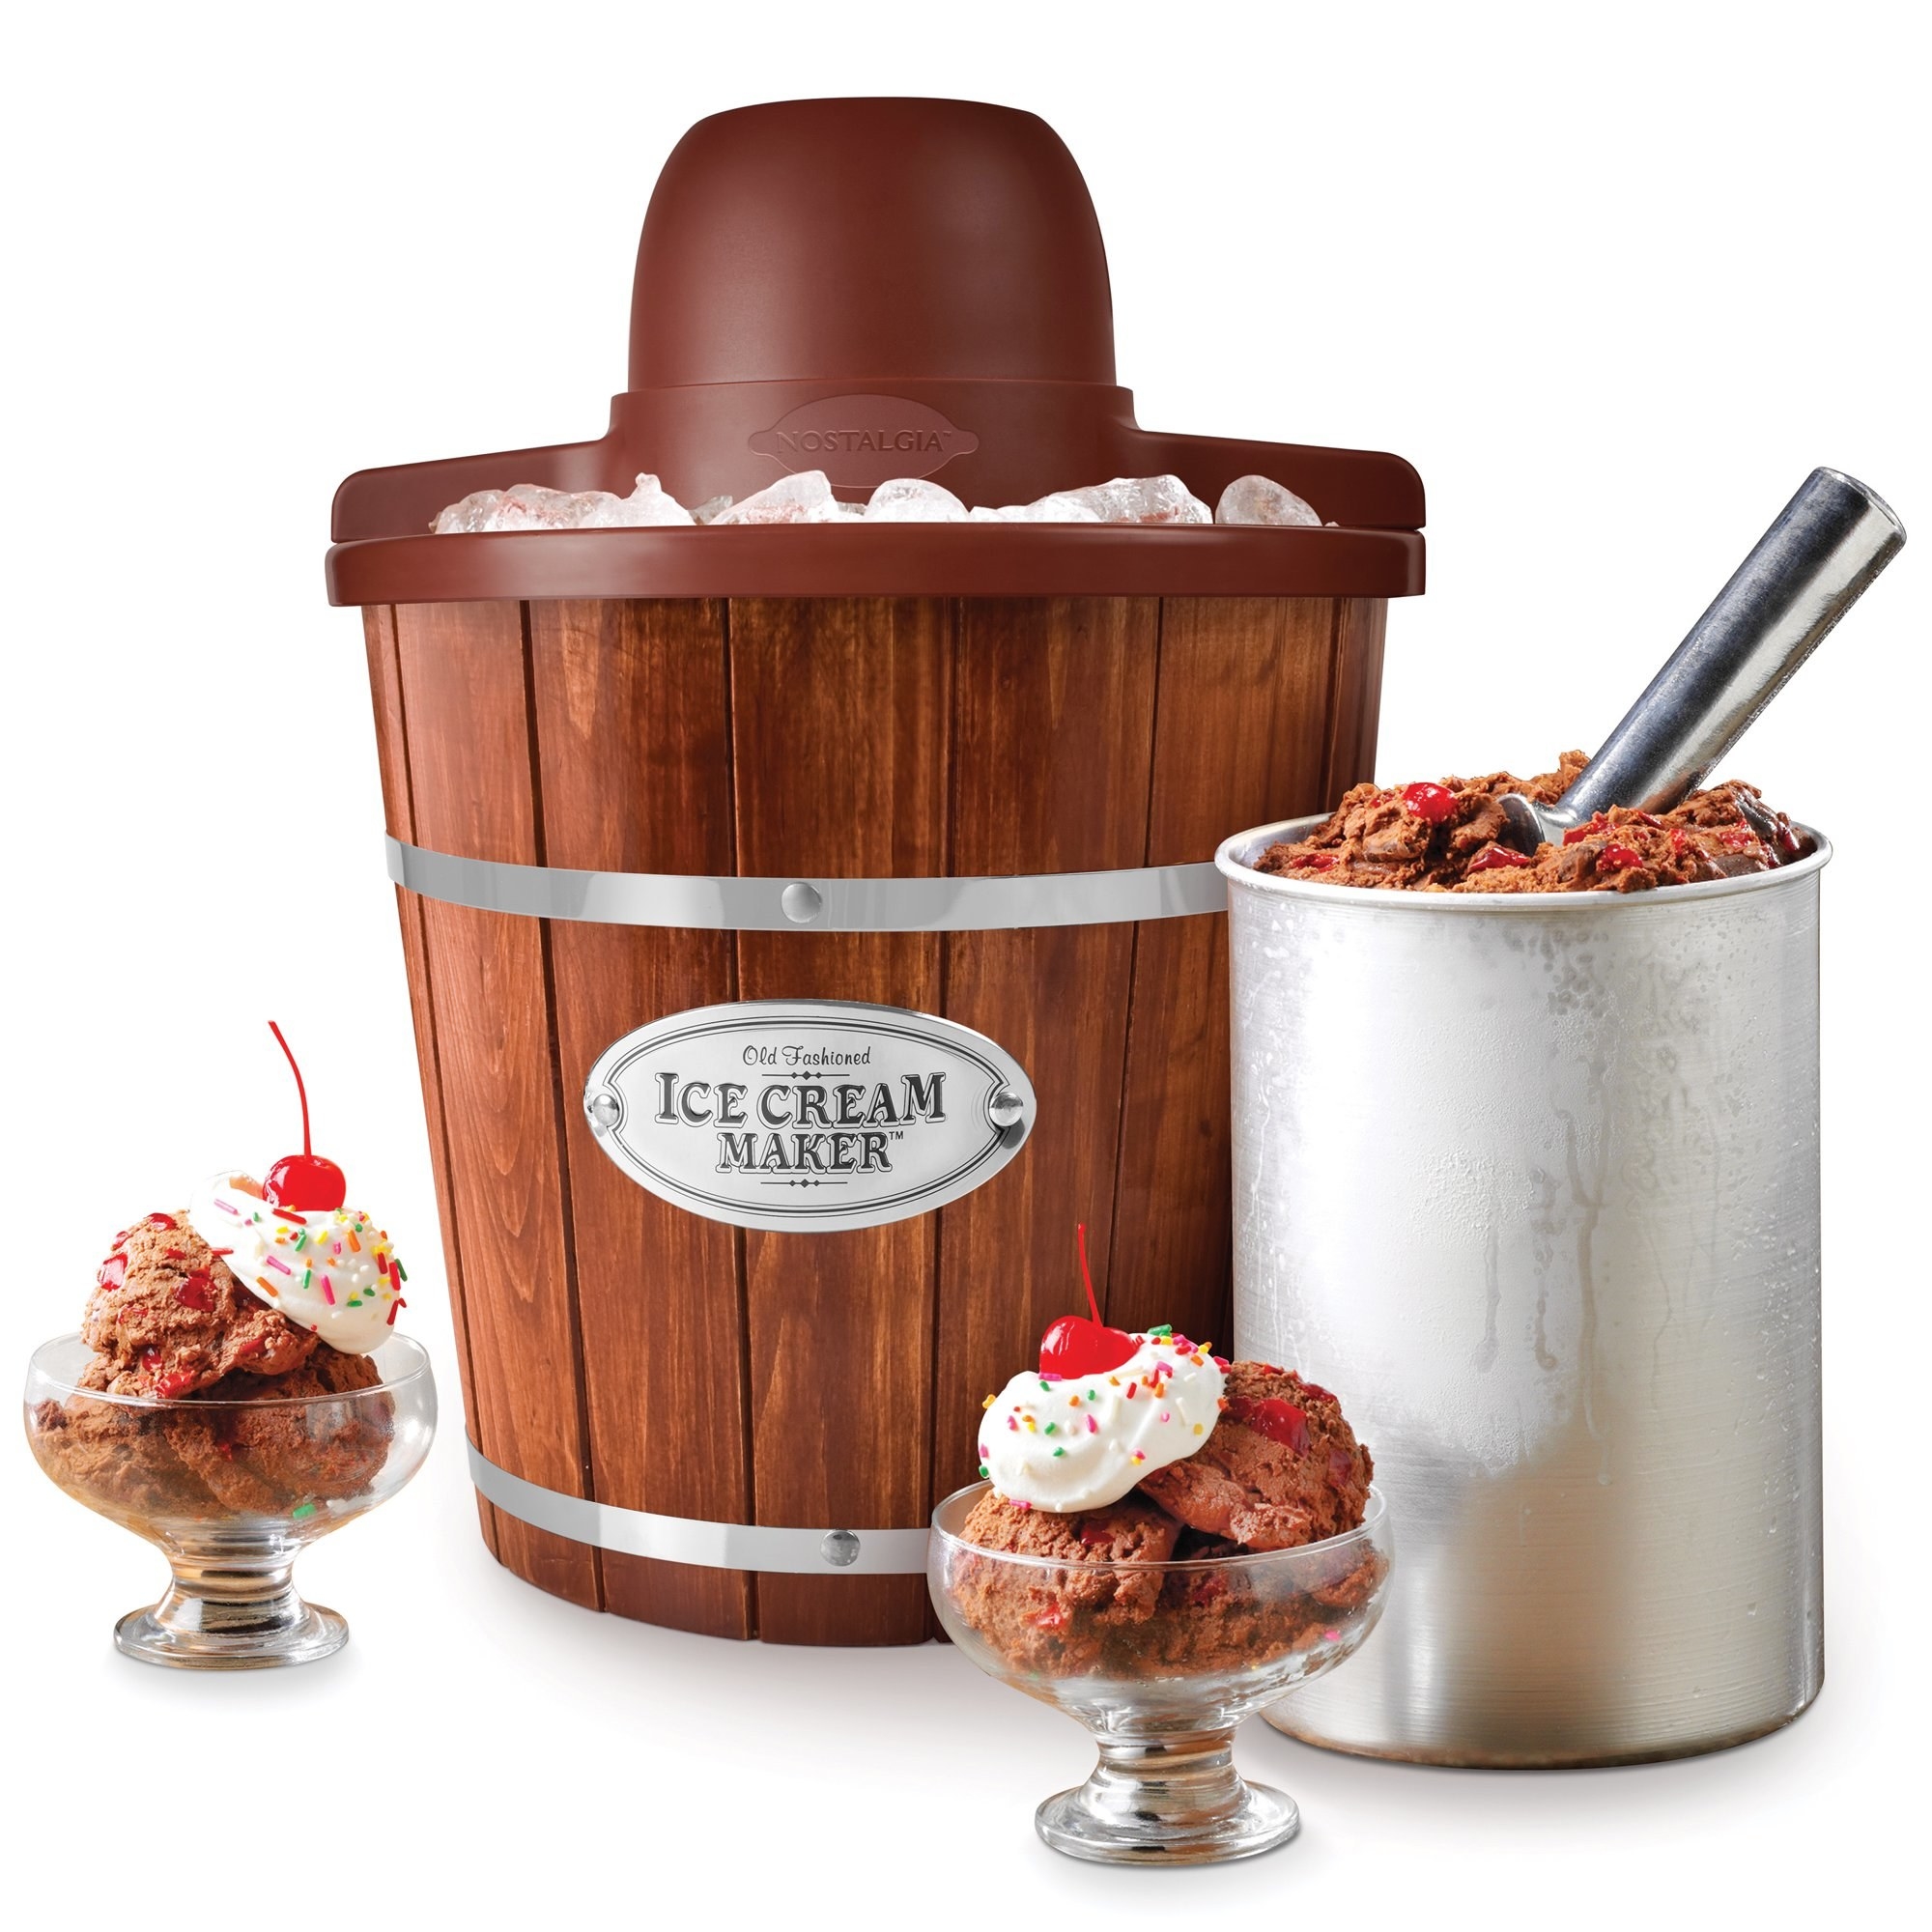 the wooden bucket ice cream maker